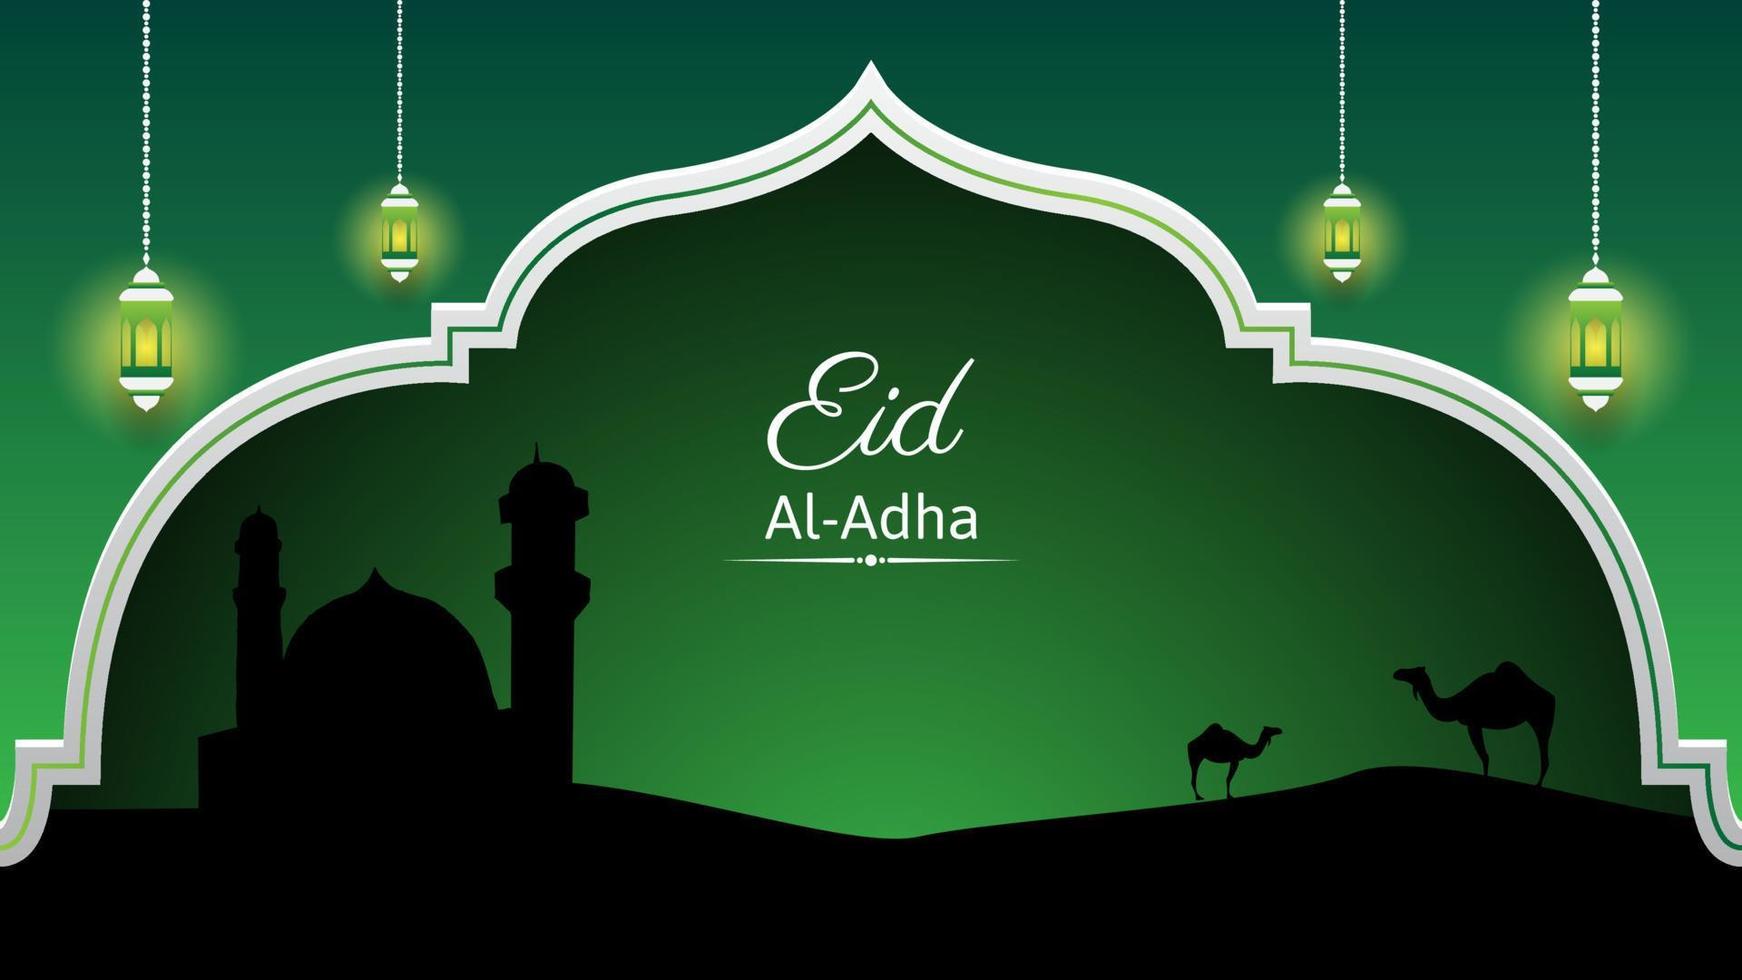 islamic background with lantern illustration for ramadan kareem, eid mubarak, eid al adha, eid al fitr, muharram, etc. vector